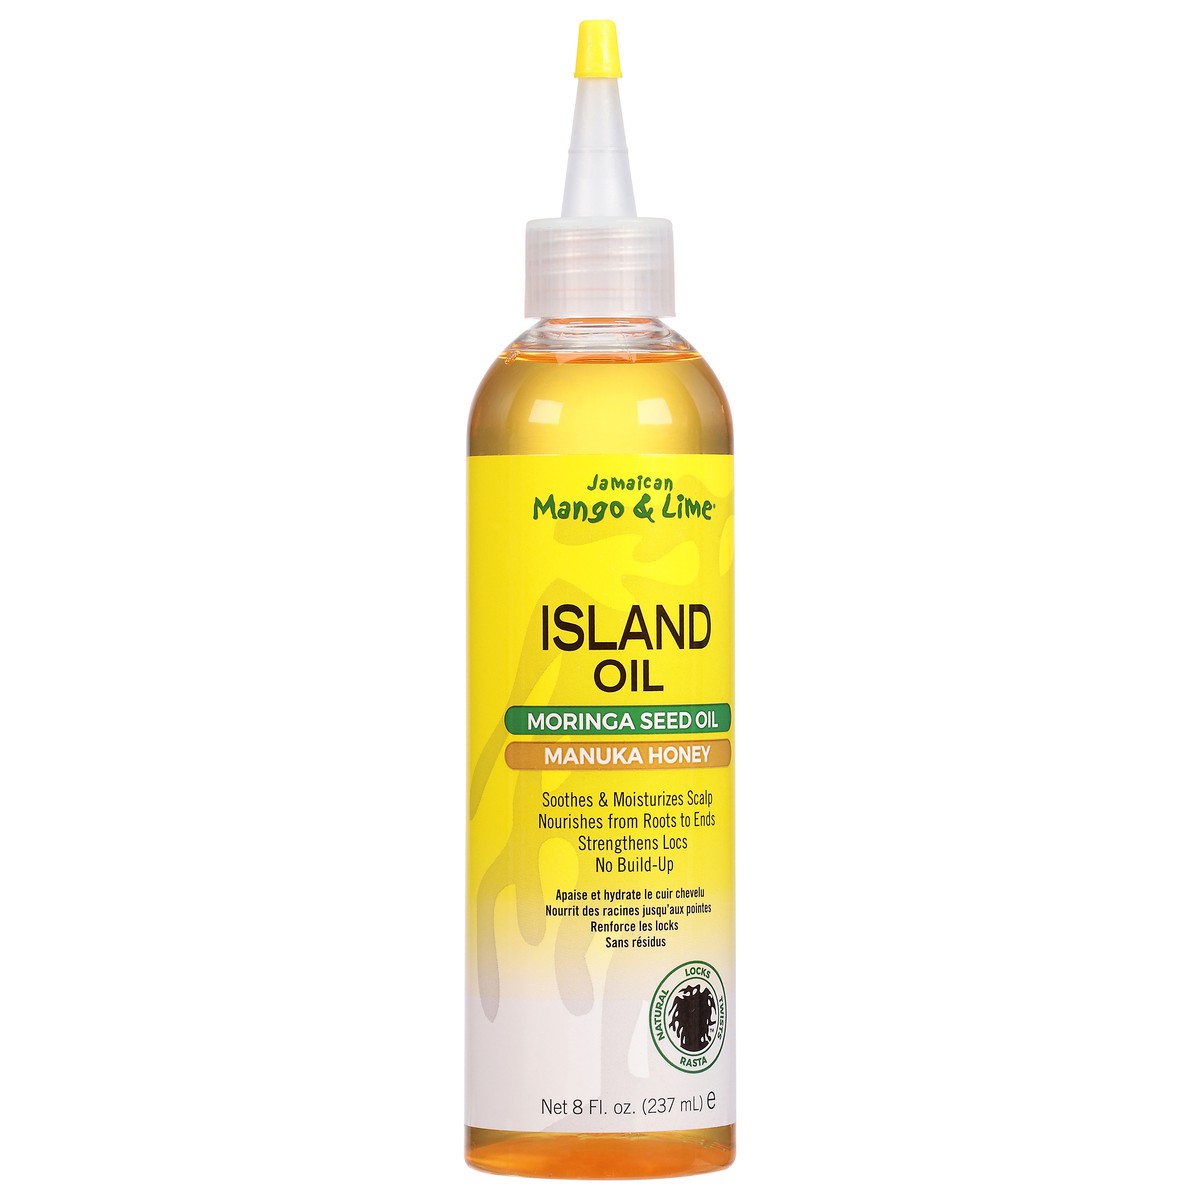 slide 2 of 9, Jamaican Mango & Lime Moringa Seed Oil Manuka Honey Island Oil 8 fl oz, 8 fl oz